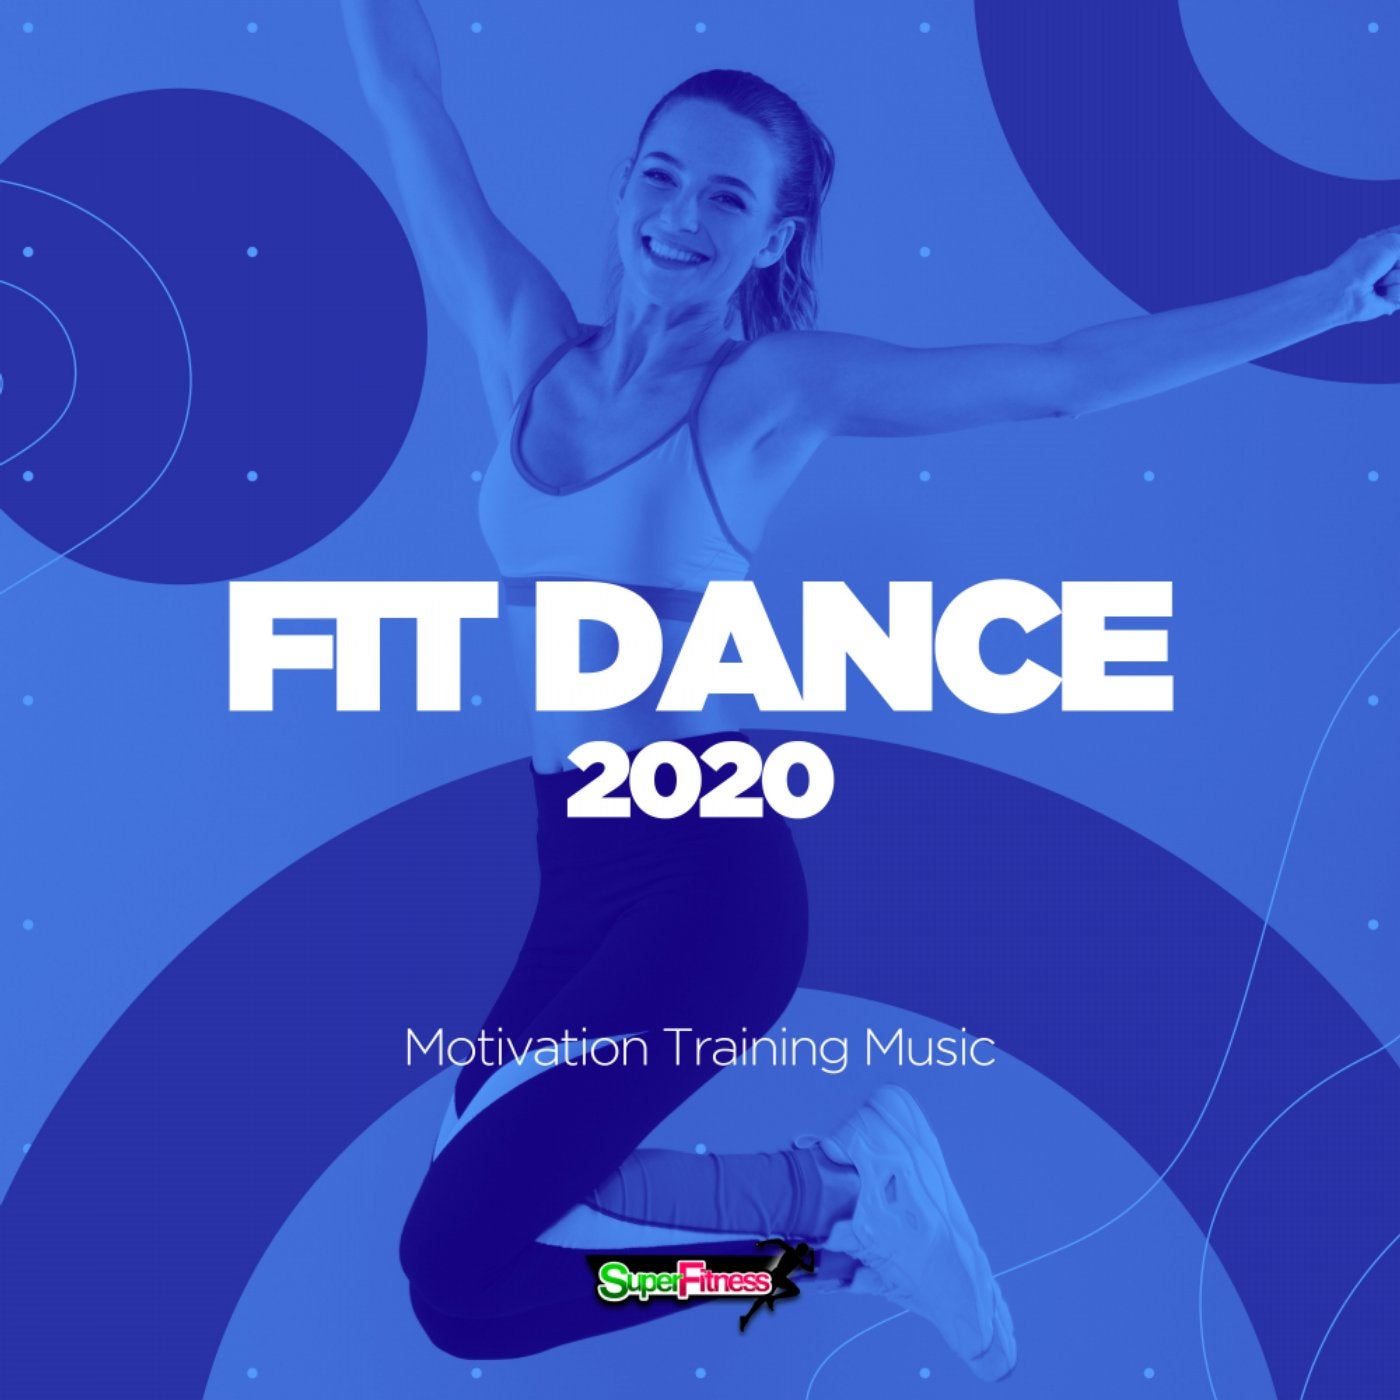 Fit Dance 2020: Motivation Training Music